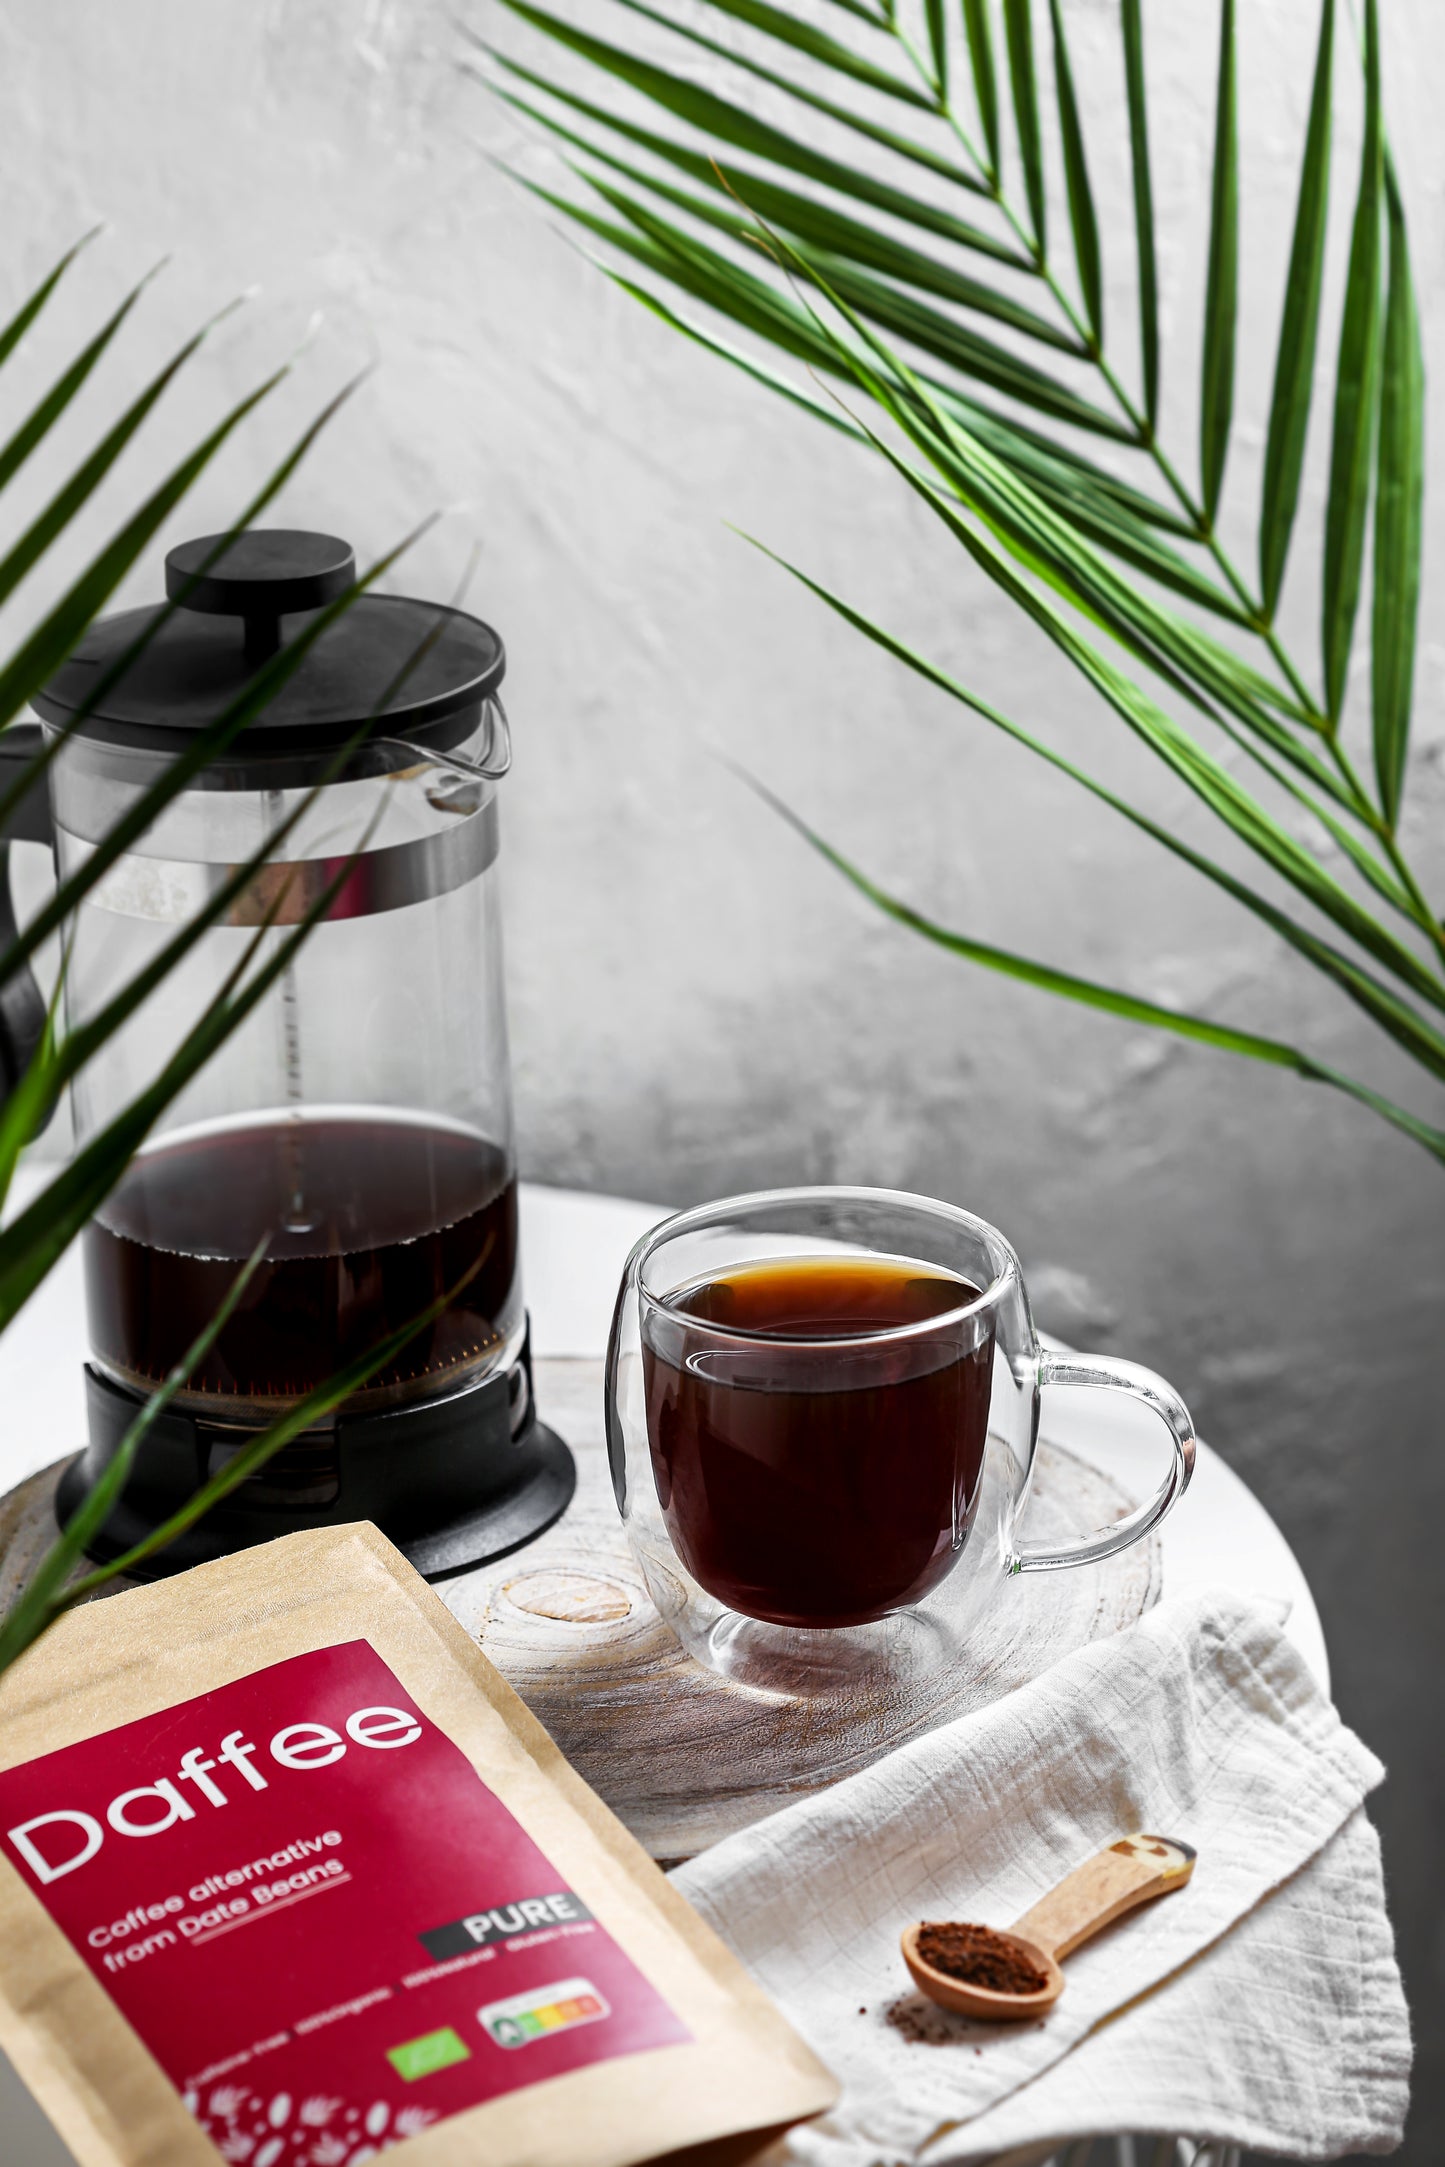 Daffee Pure alternatieve koffie van dadelbonen in glazen mok naast Franse pers, op linnen servet.